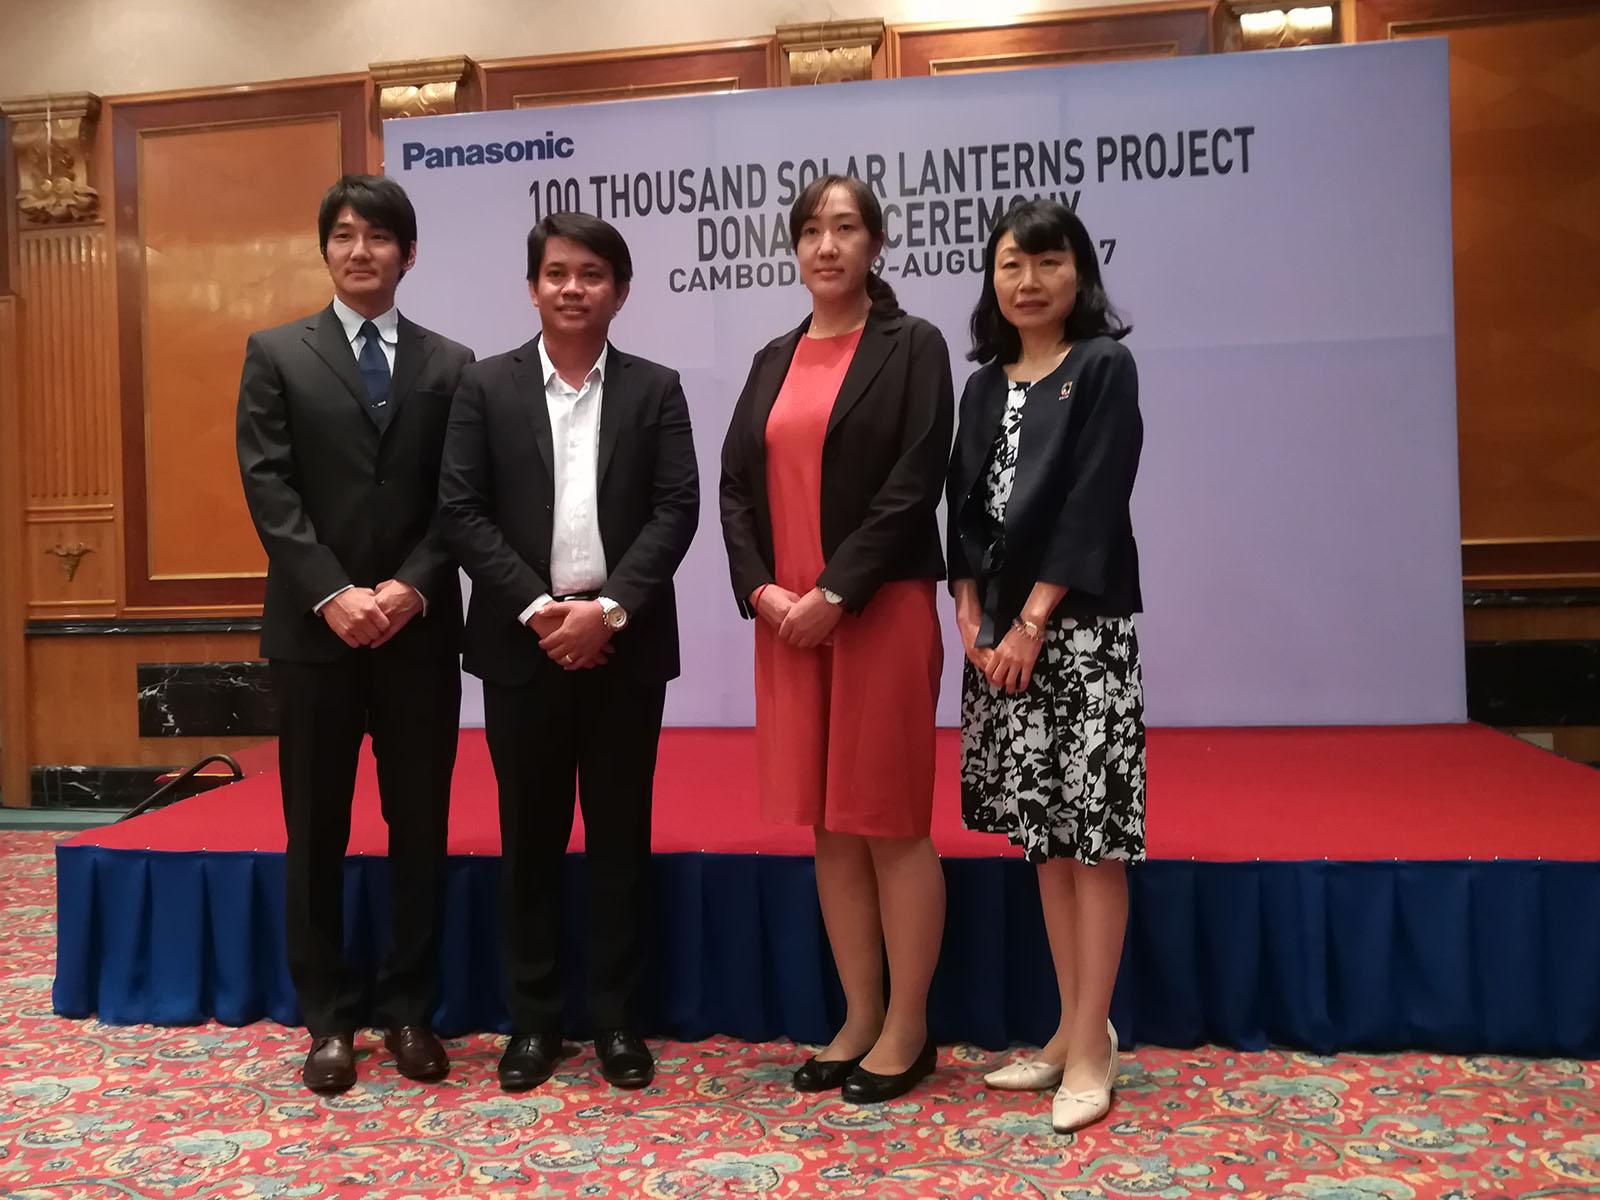 Group photo with NPO representatives